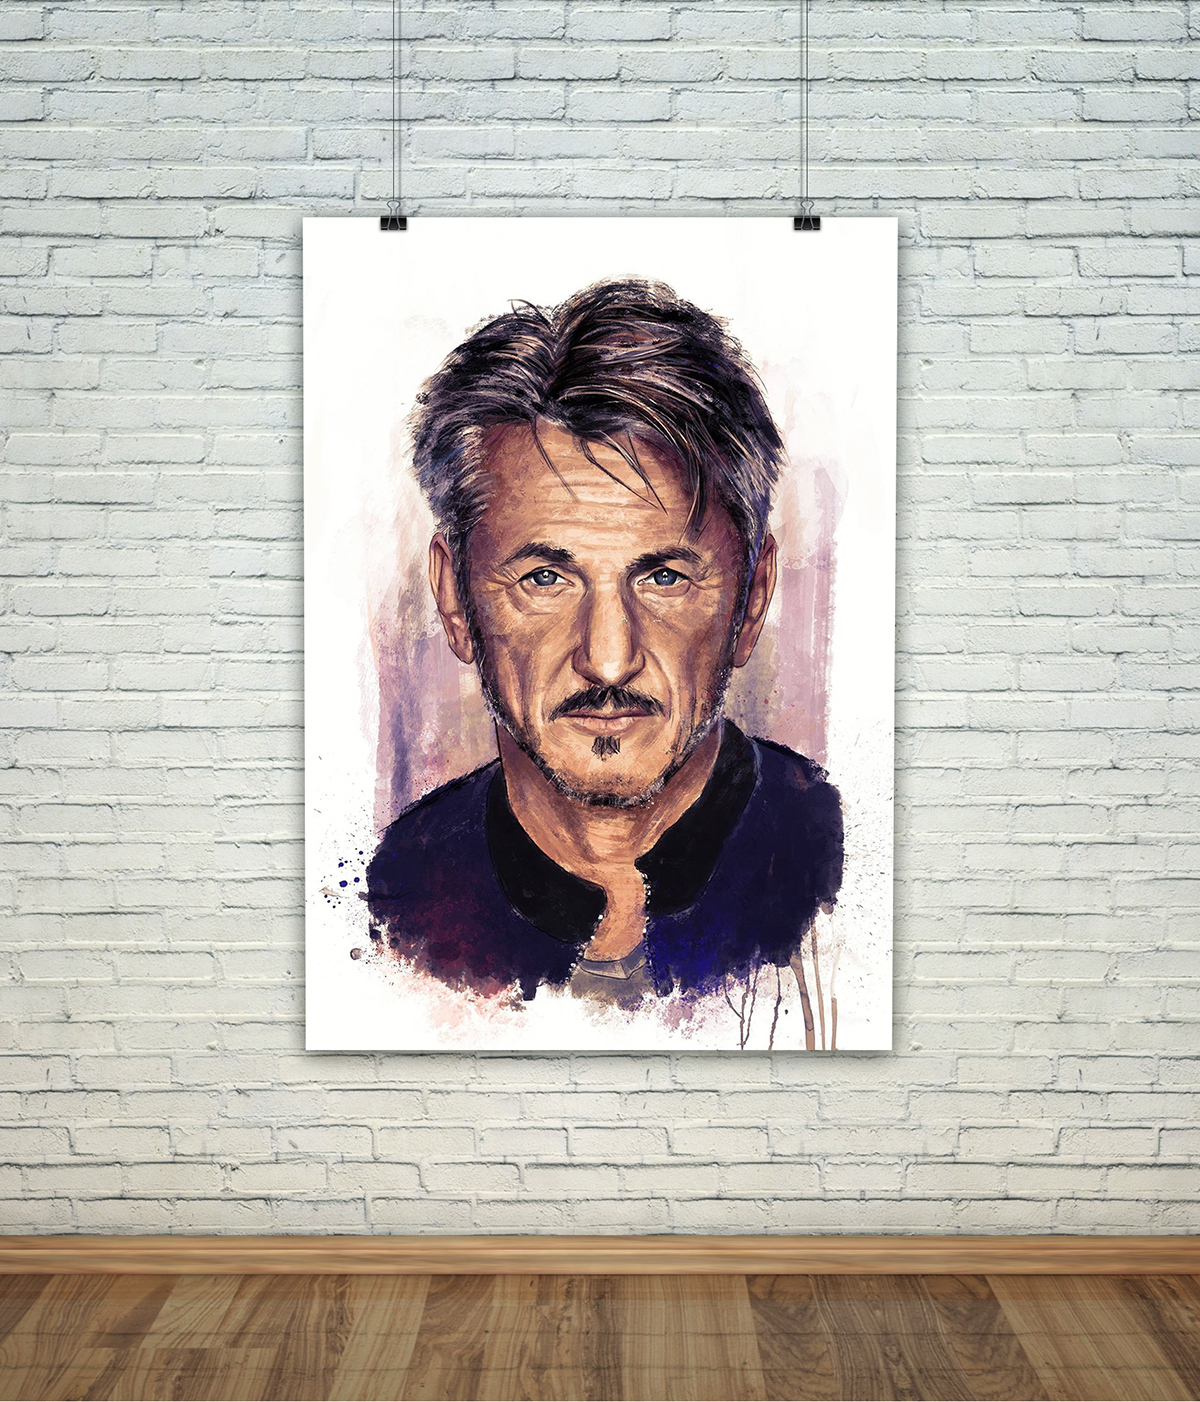 Sean Penn Sean penn portrait paint digital Celebrity actor portraits